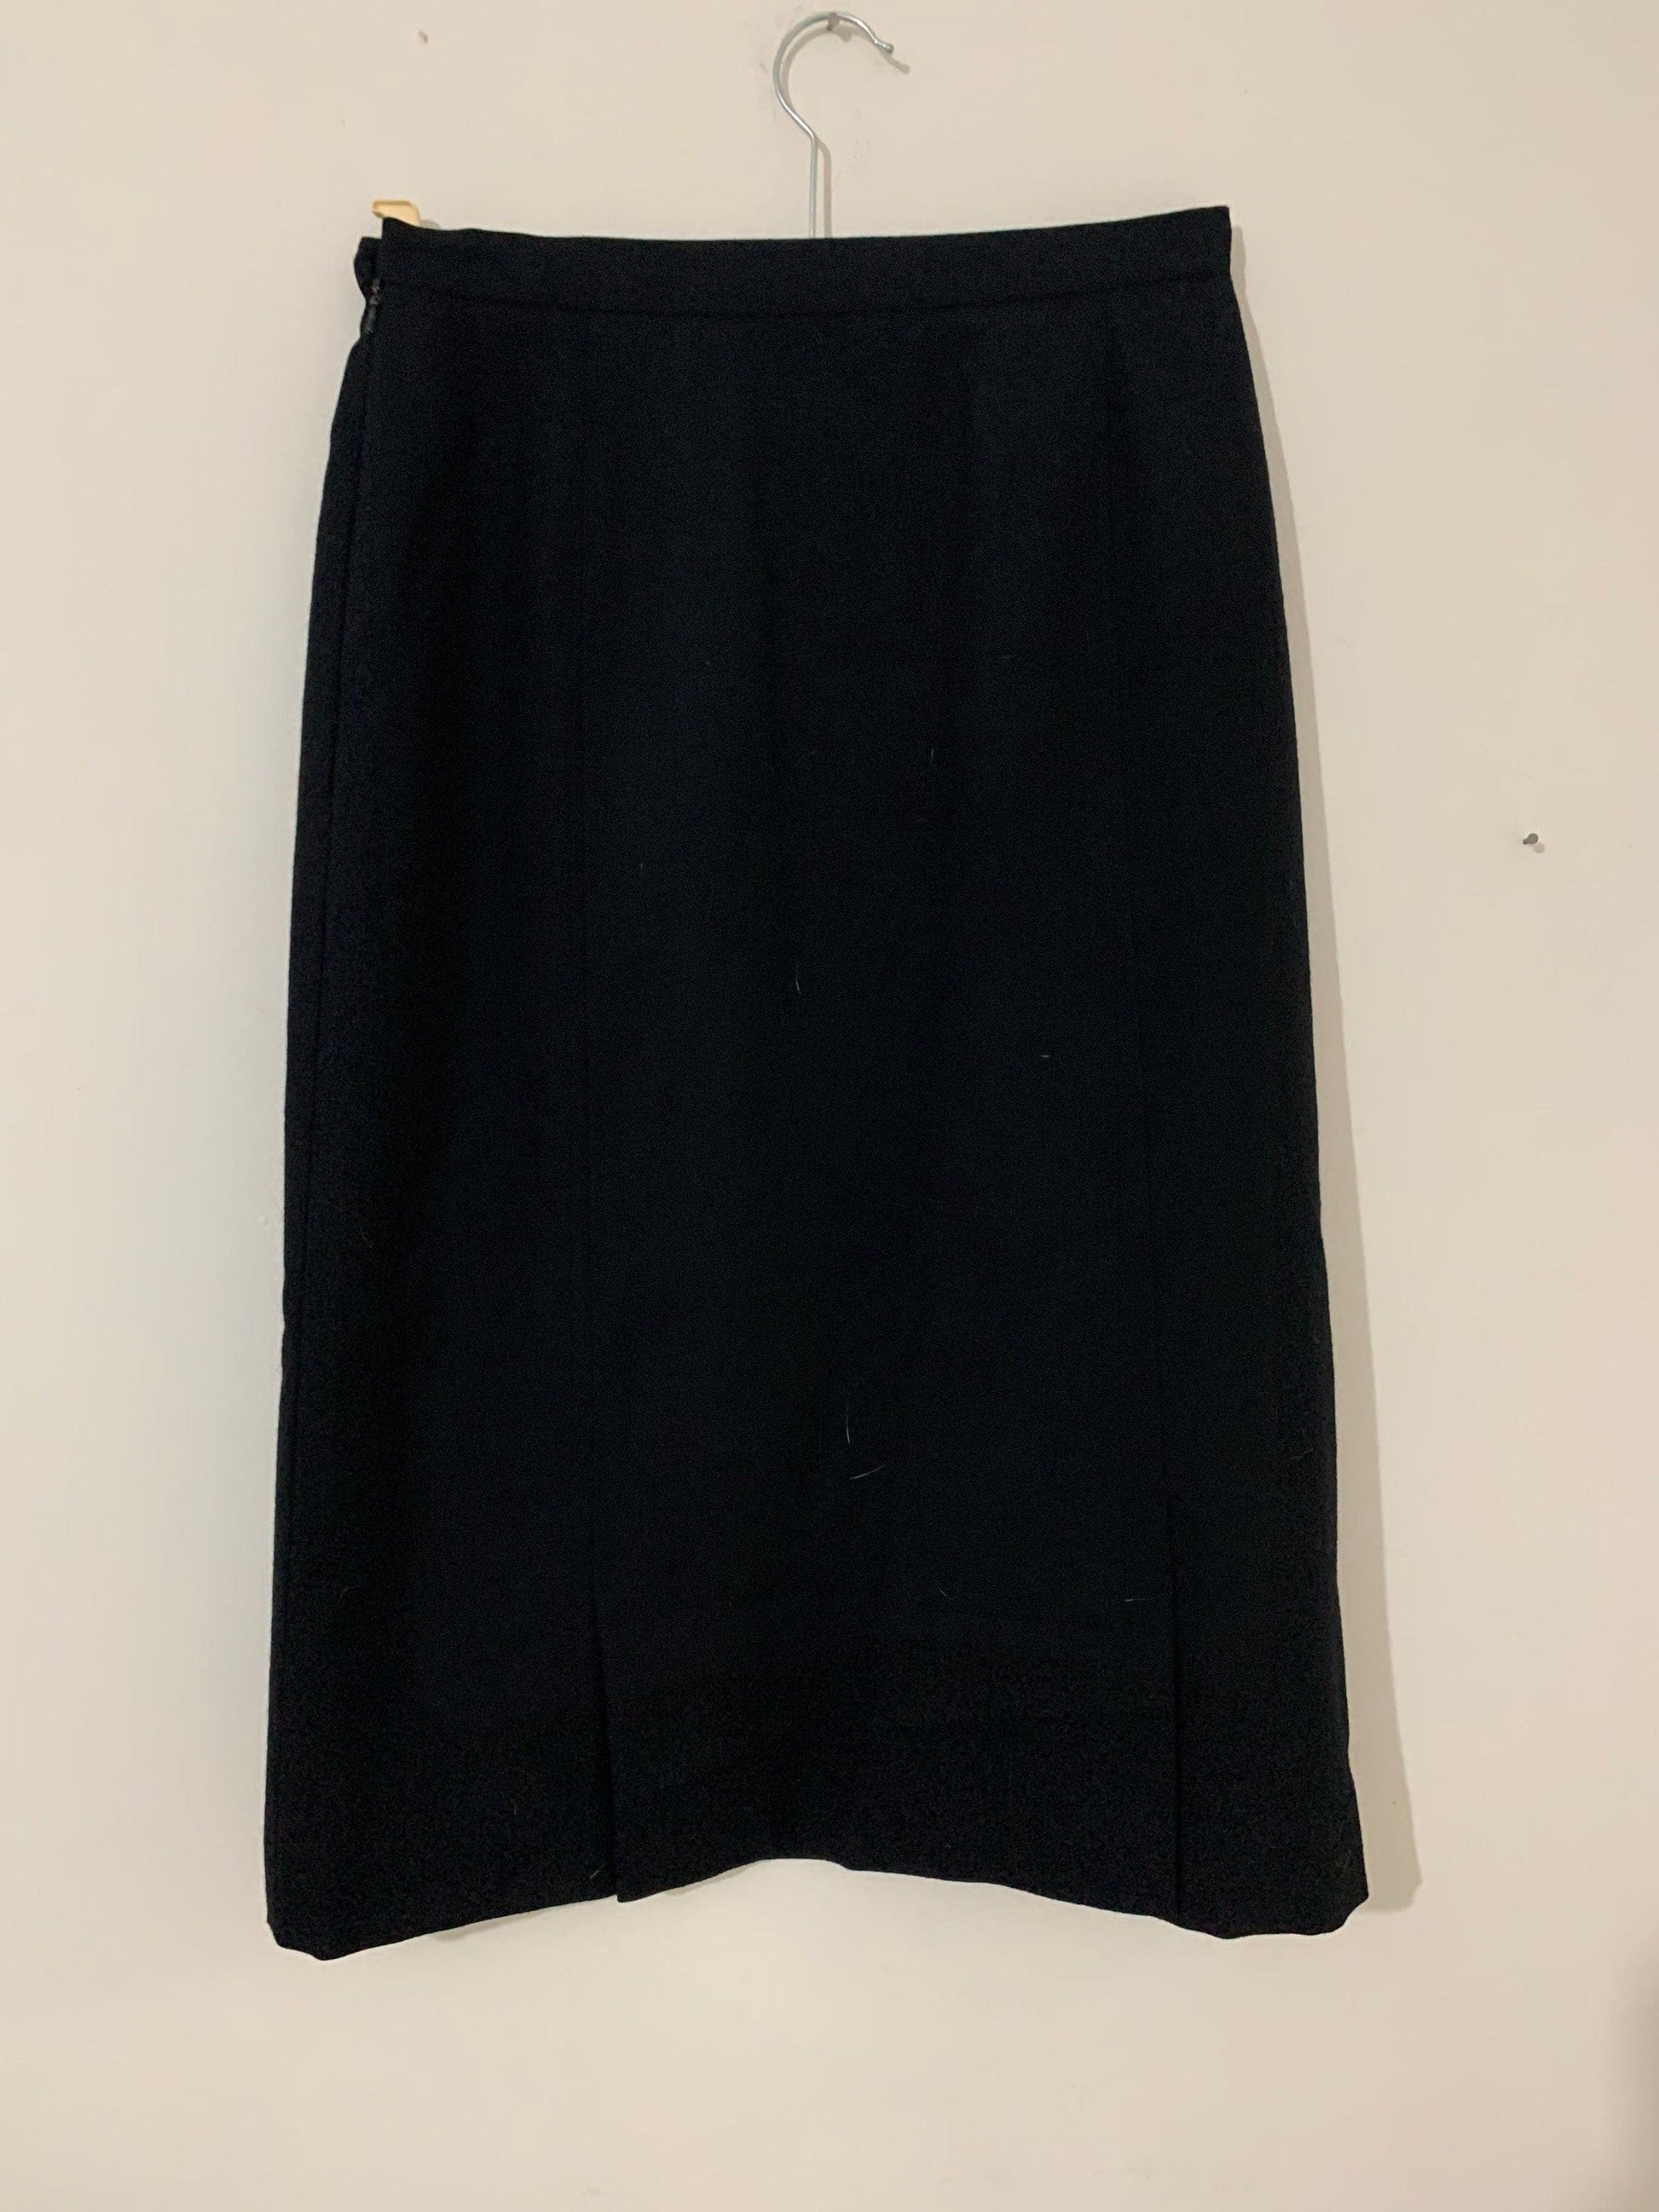 Vintage Jaeger Skirt Midi Length Classic Black pencil Skirt UK 12-14